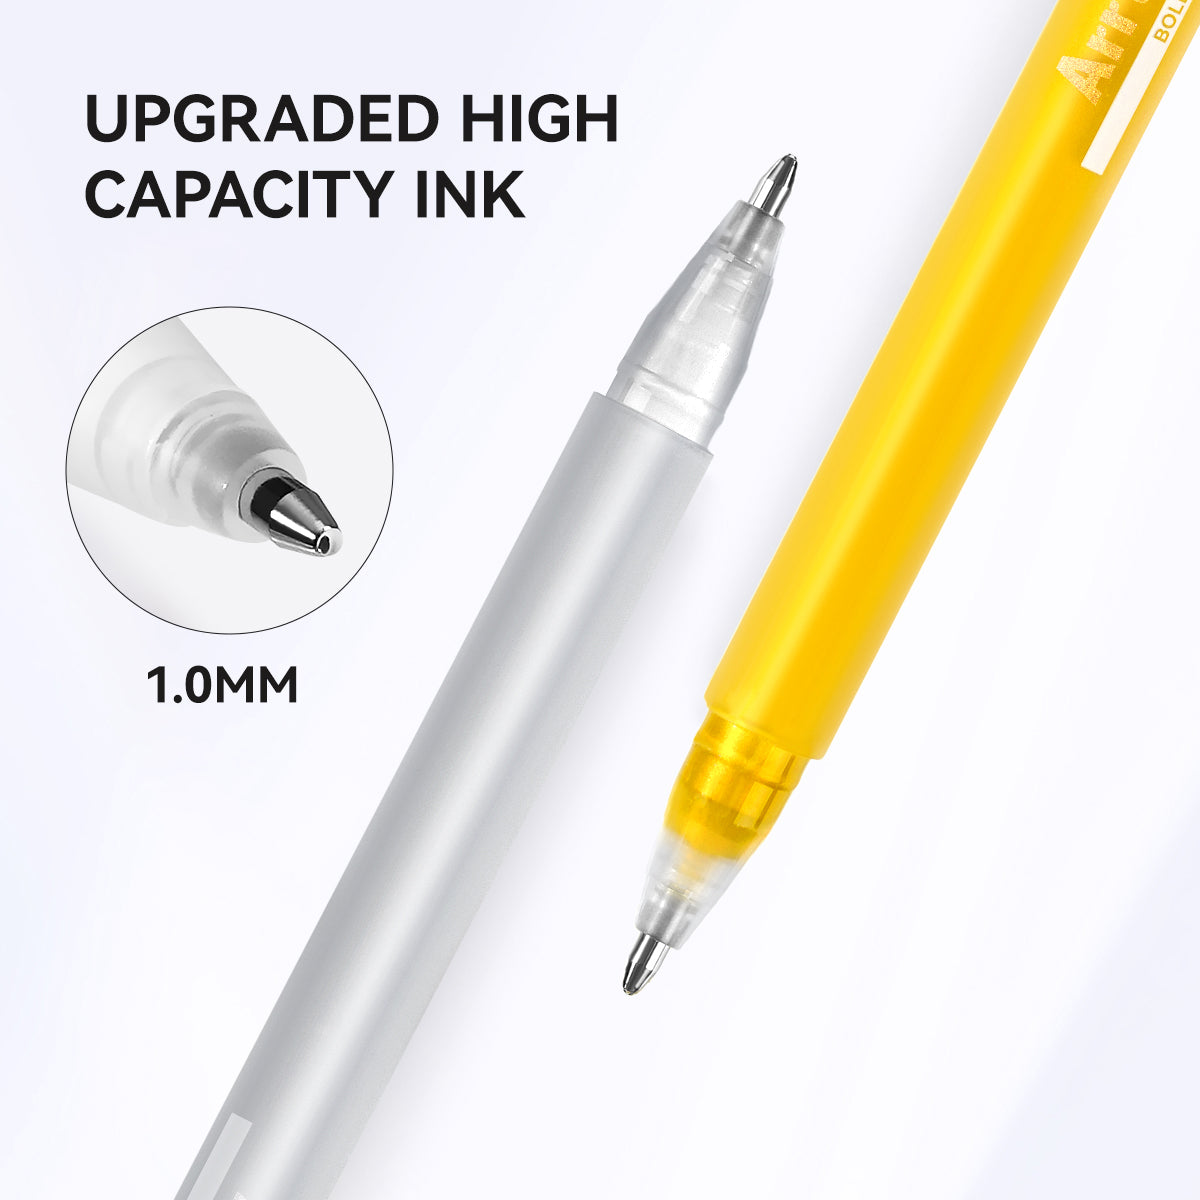 Arrtx Gel Pens Gold & Silver Color 8 Pack Large Capacity White Ink Pens